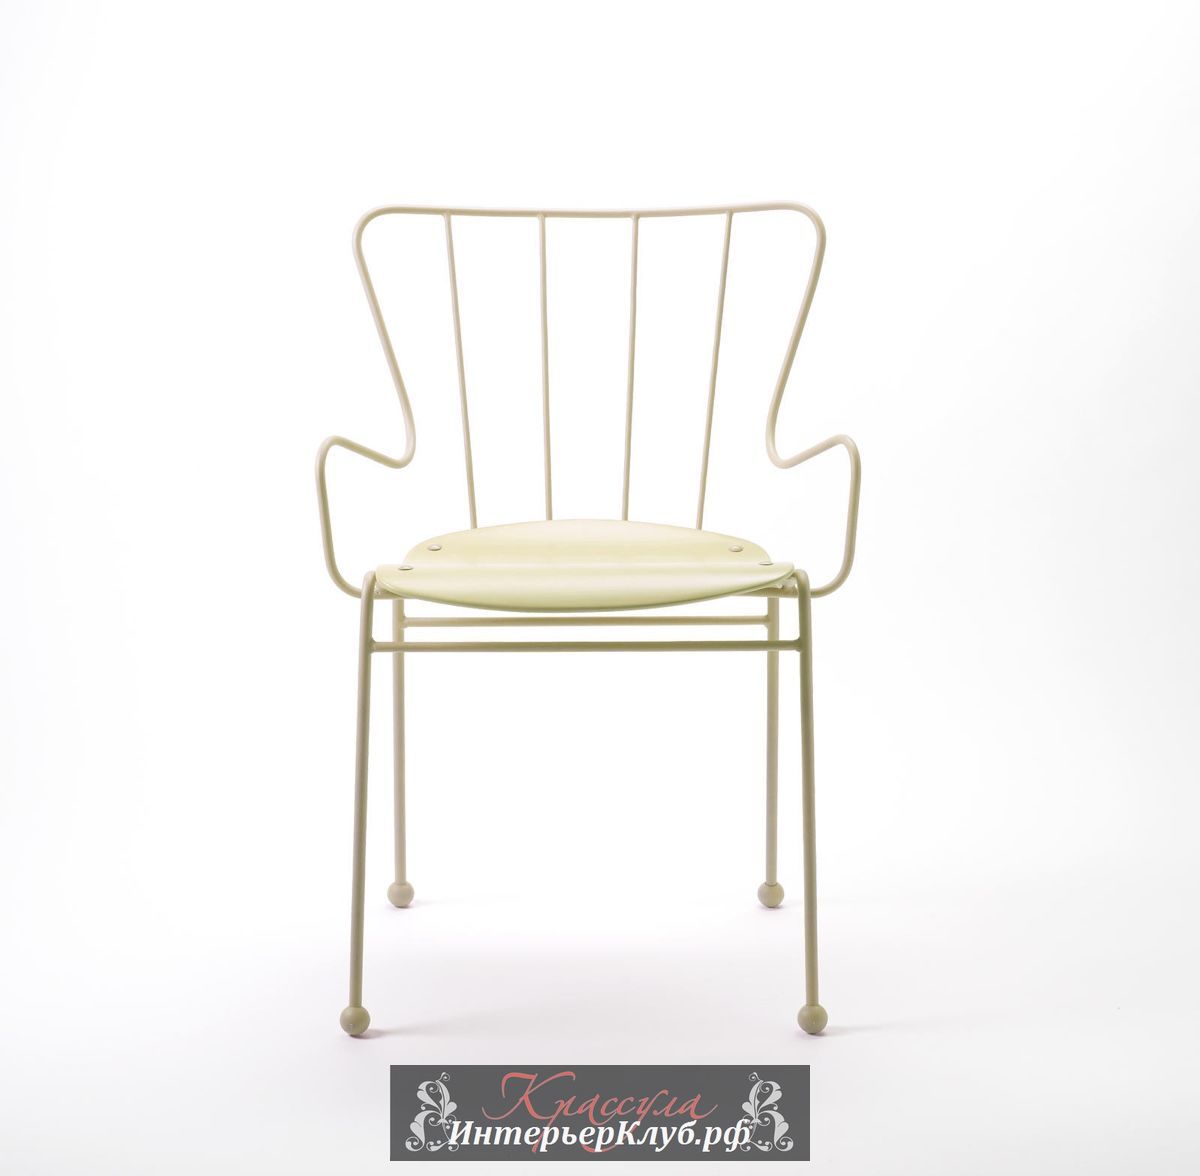 2 Стул Антилопа. Дизайнер Эрнест Рэйс (Ernest Race)  спроектировал стул Антилопа в 1951 году на праздничный фестиваль Британии, Antelope-chair-in-white